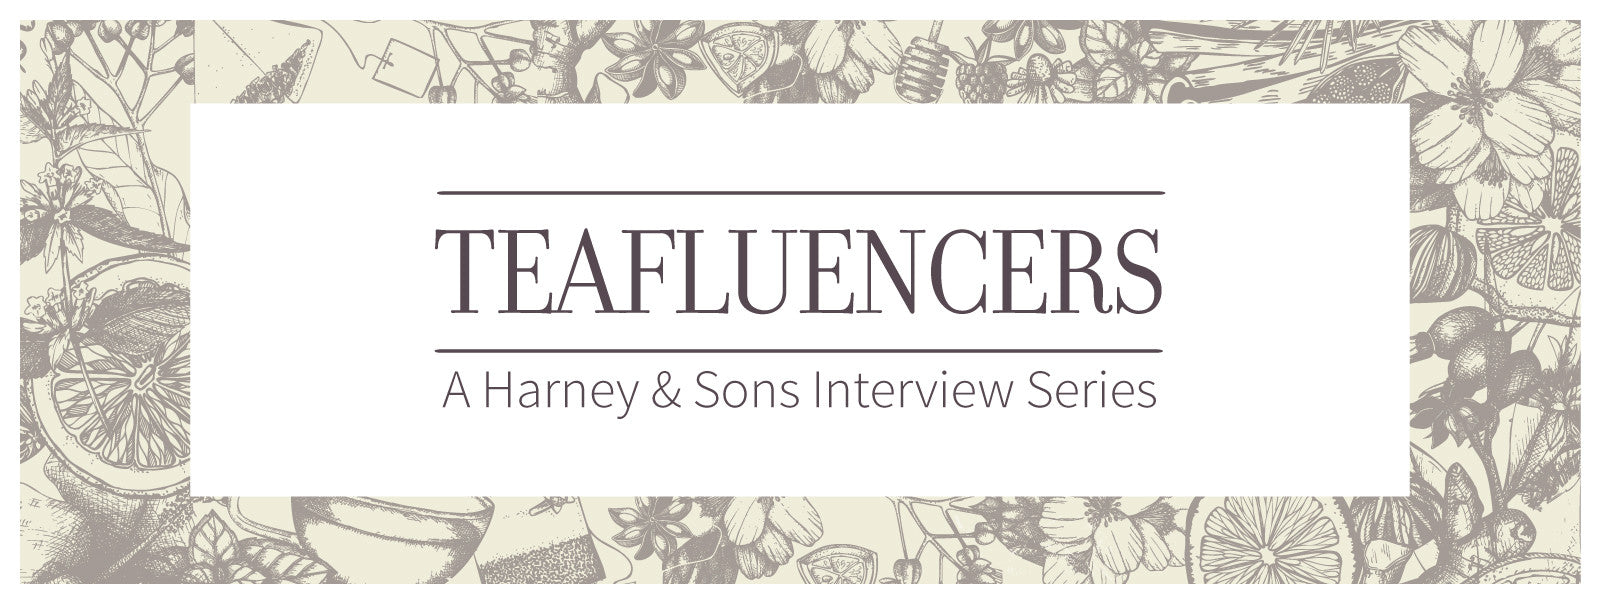 Molly Hatch | Harney & Sons Teafluencer